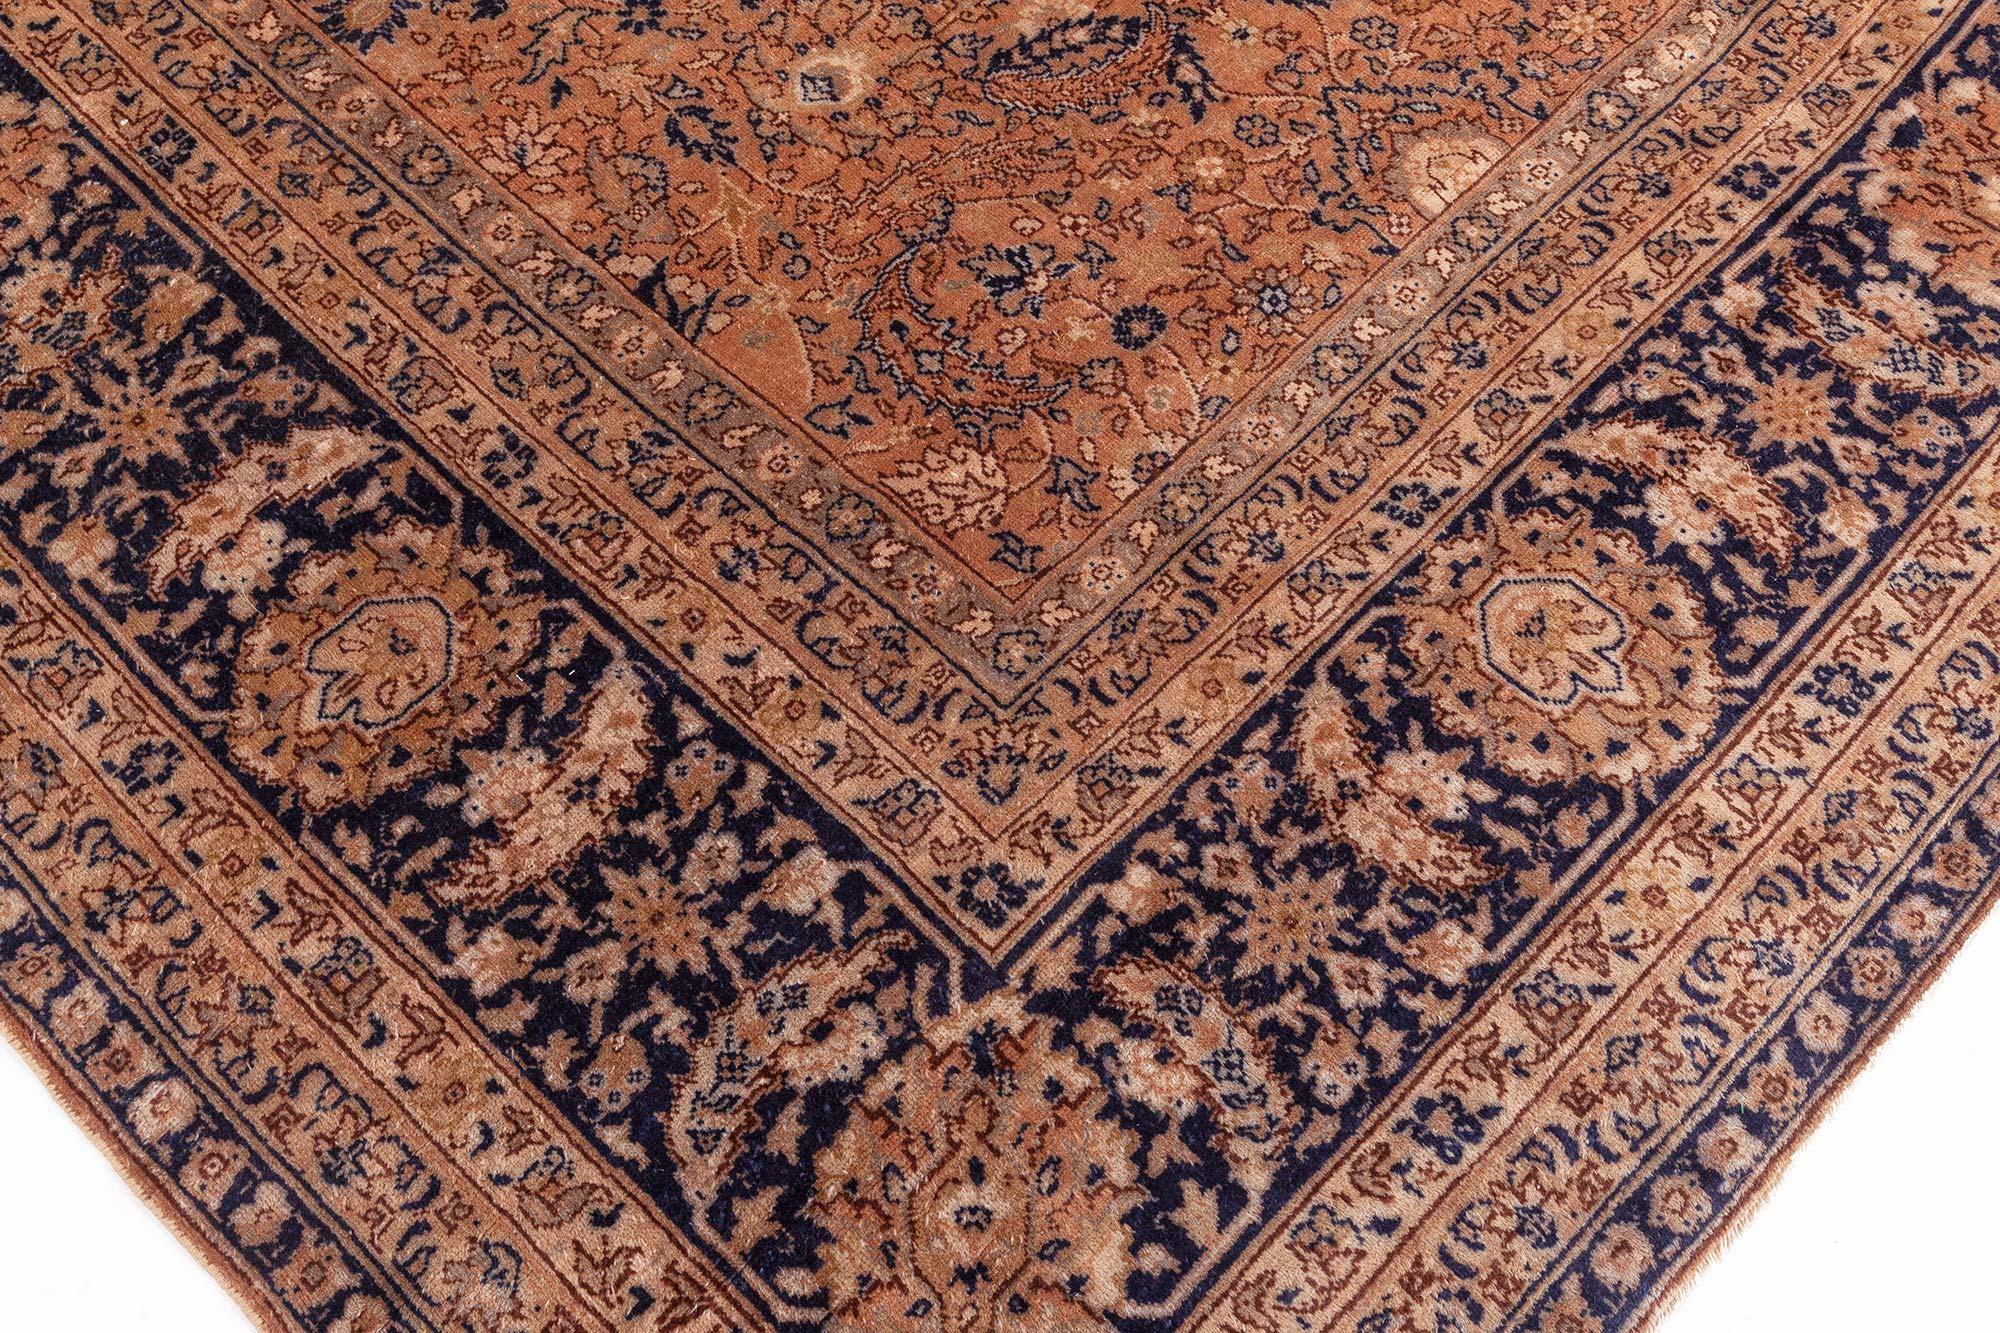 Antique Turkish Sivas handmade botanic carpet
Size: 13'9